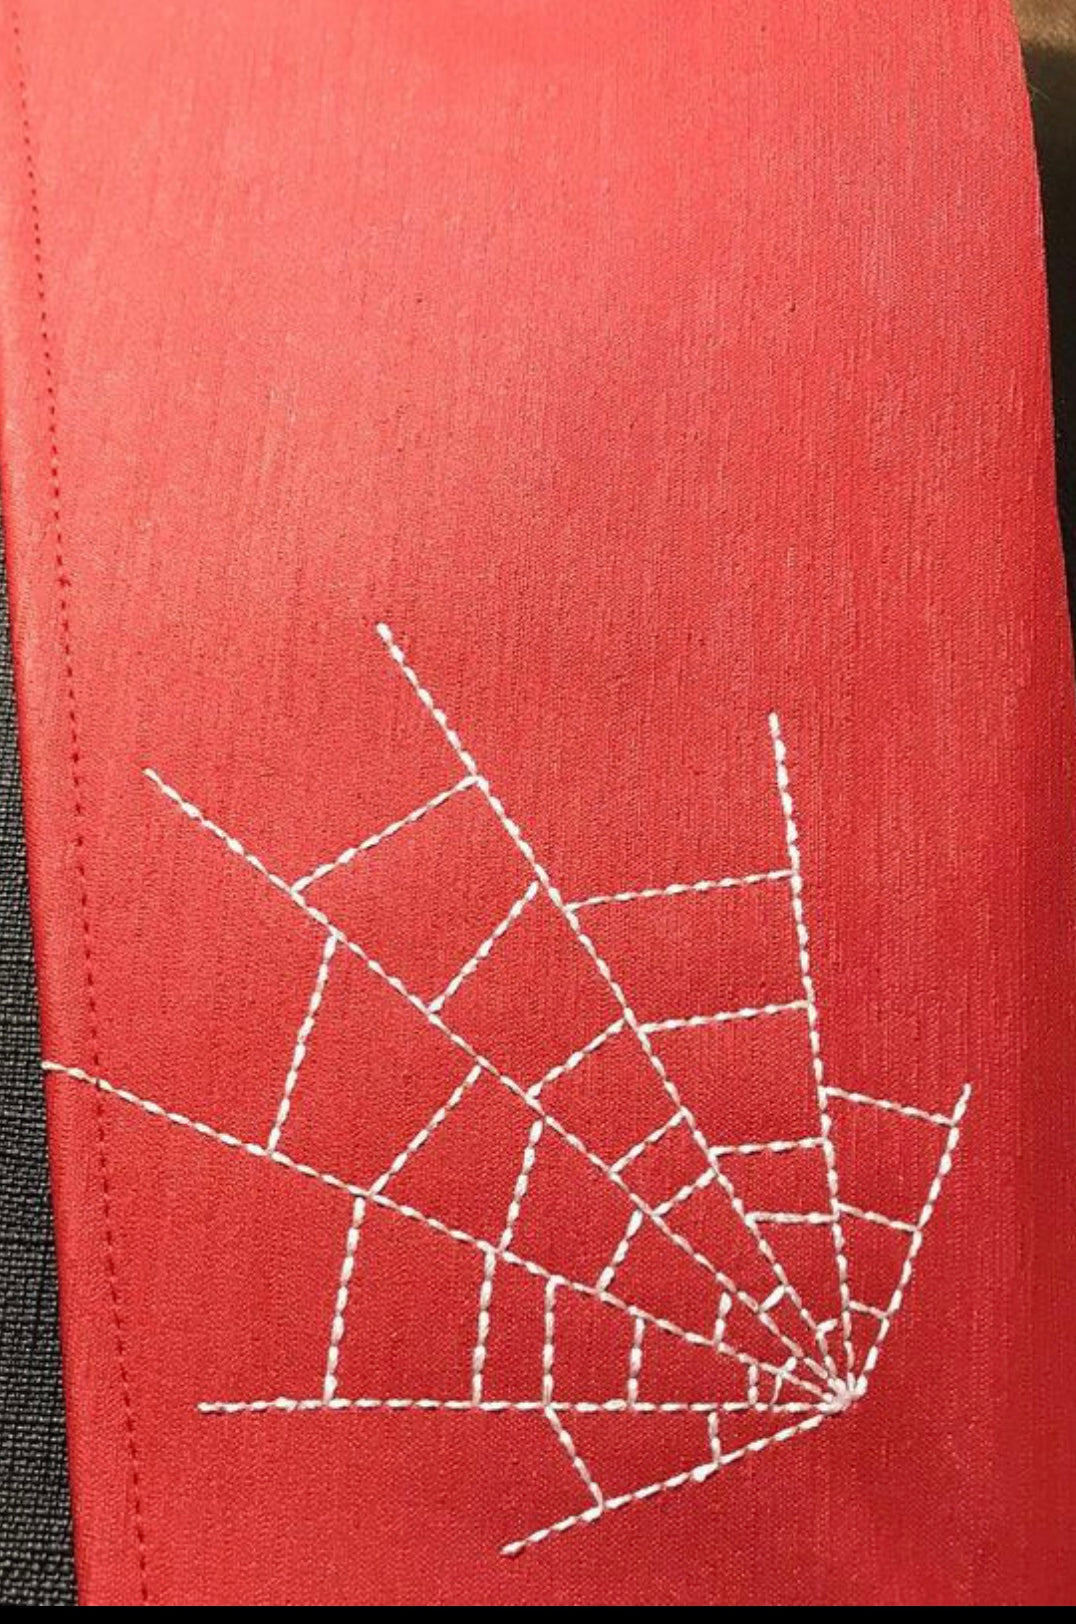 Spiderweb 4x4